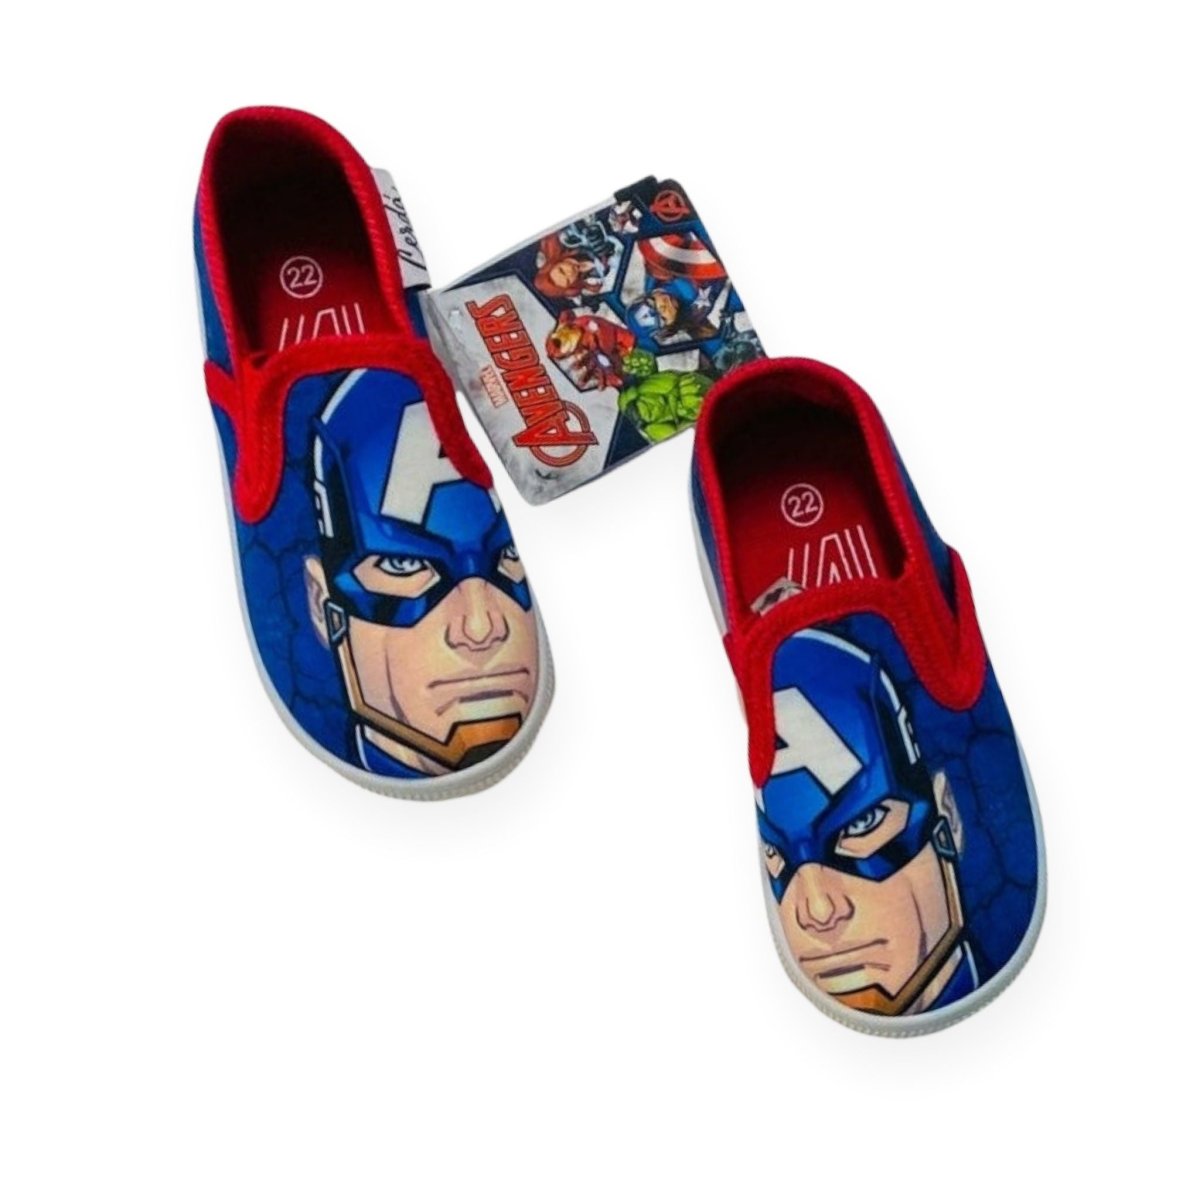 Sneakers Capitan America Marvel - Mstore016 - sneaker bimbo - Avengers